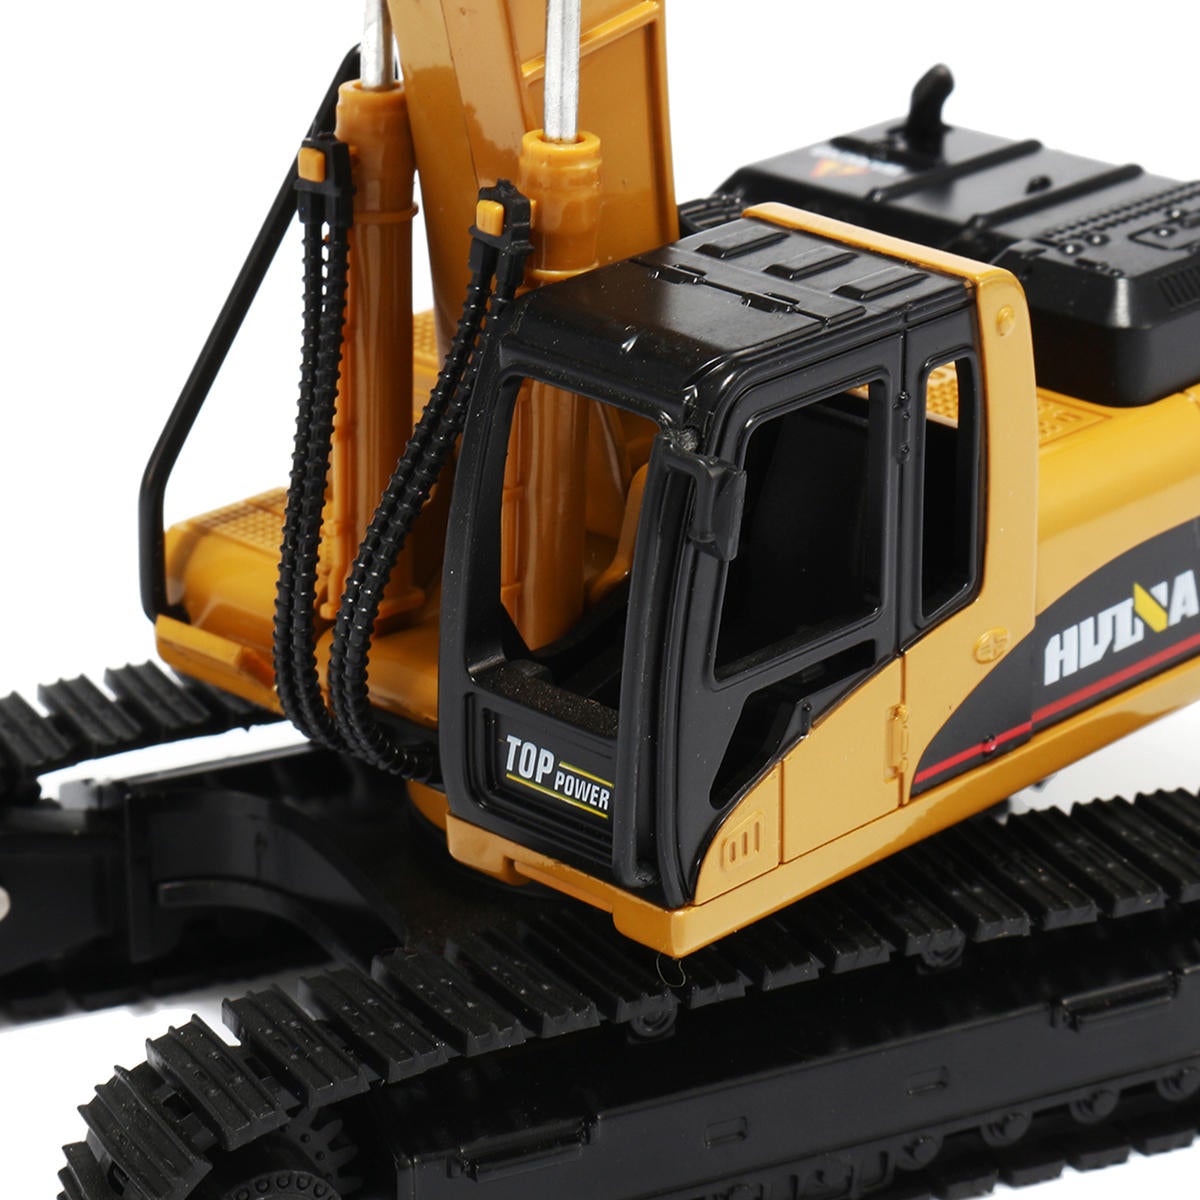 1:50 Alloy Excavator Toys Engineering Vehicle Diecast Model Metal Castings Vehicles